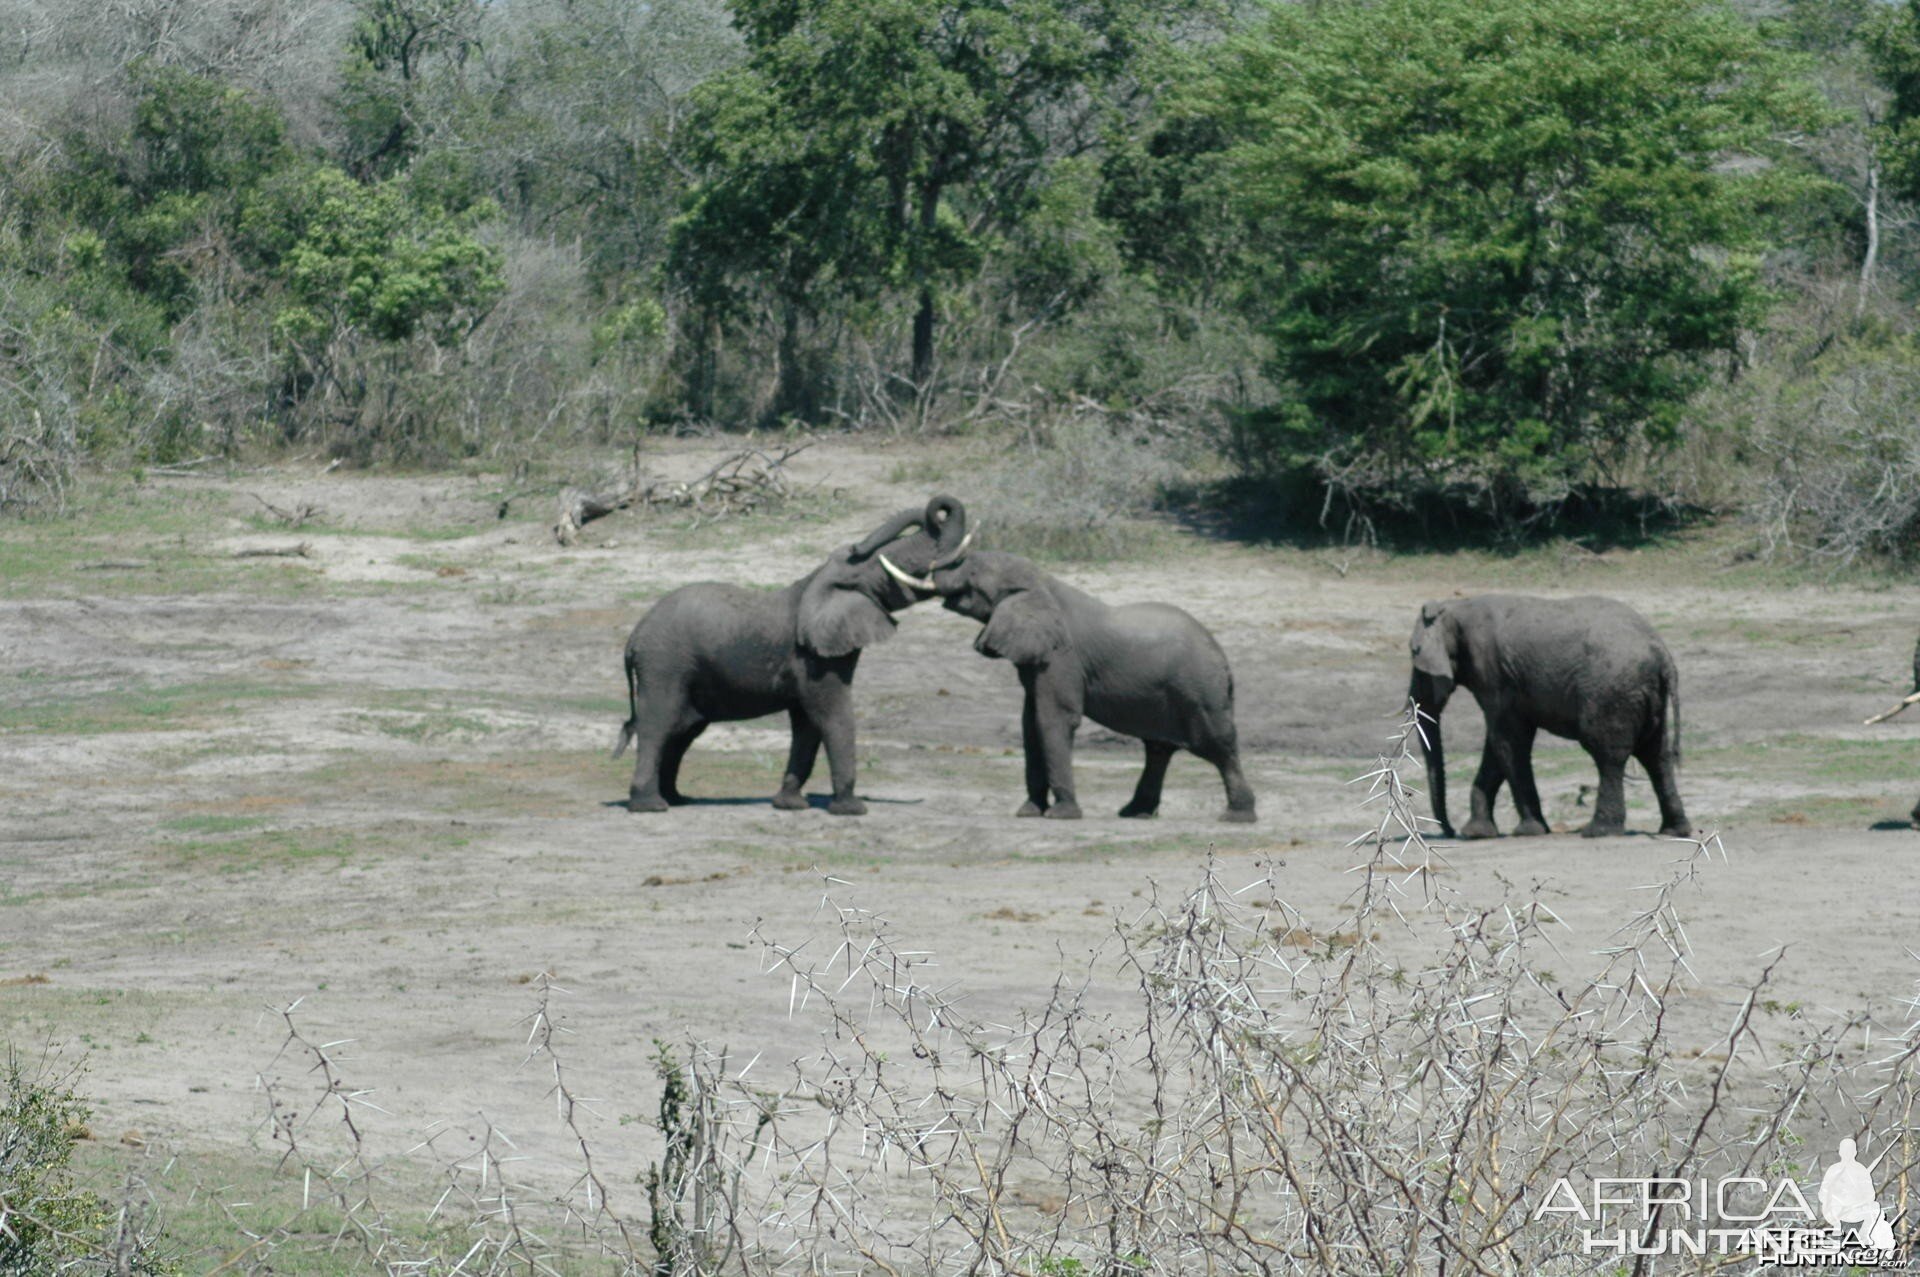 Elephants South Africa